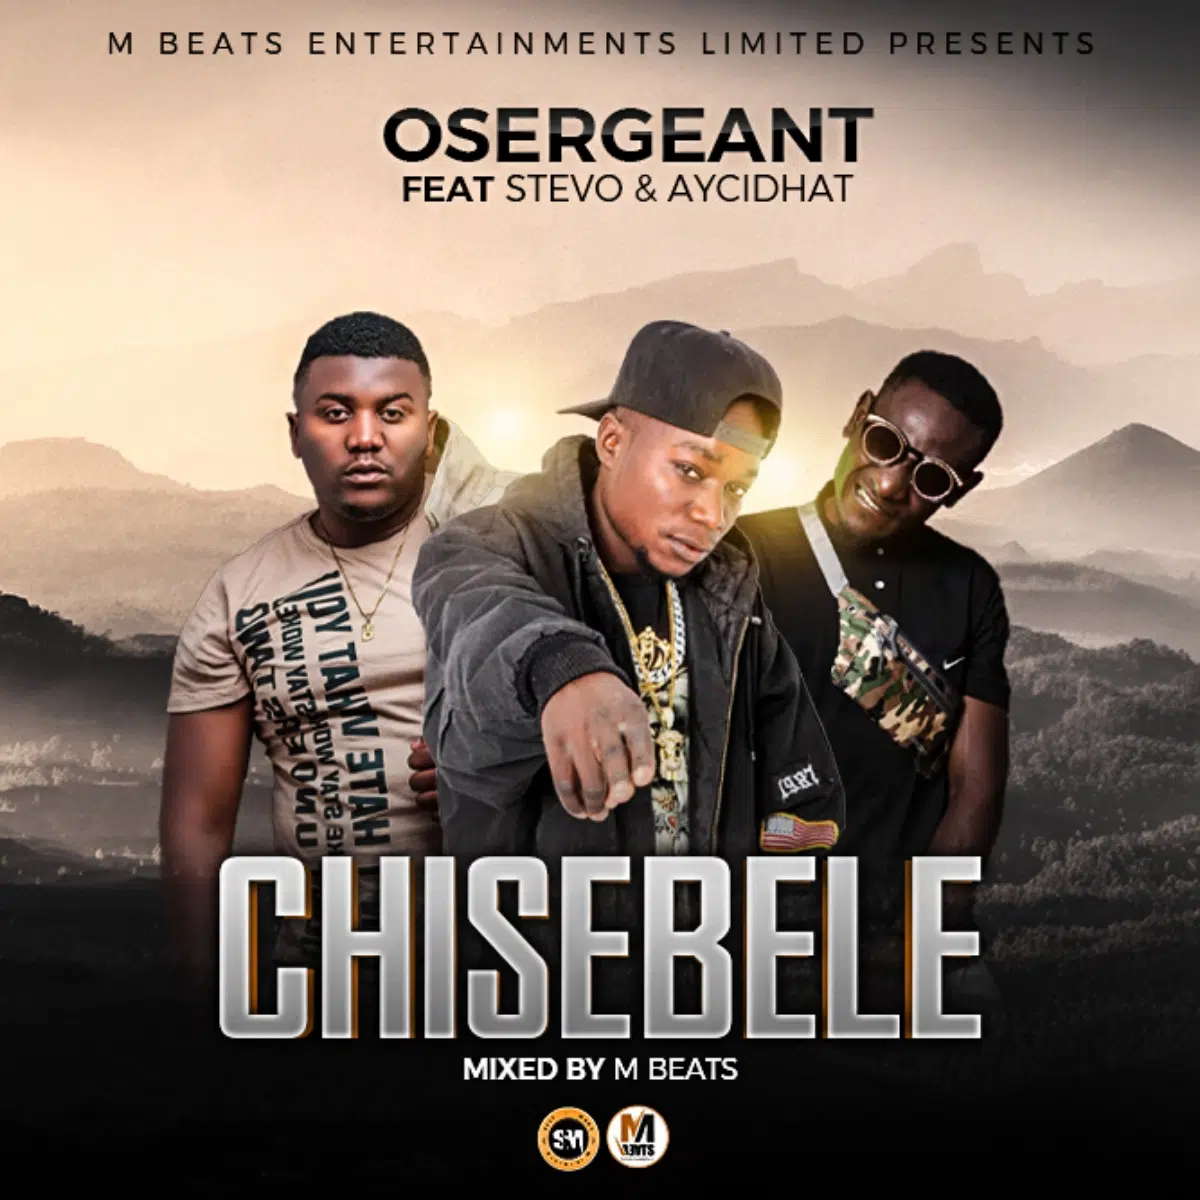 DOWNLOAD: One Sergeant Ft Stevo & Aycidhat – “Chisebele” Mp3